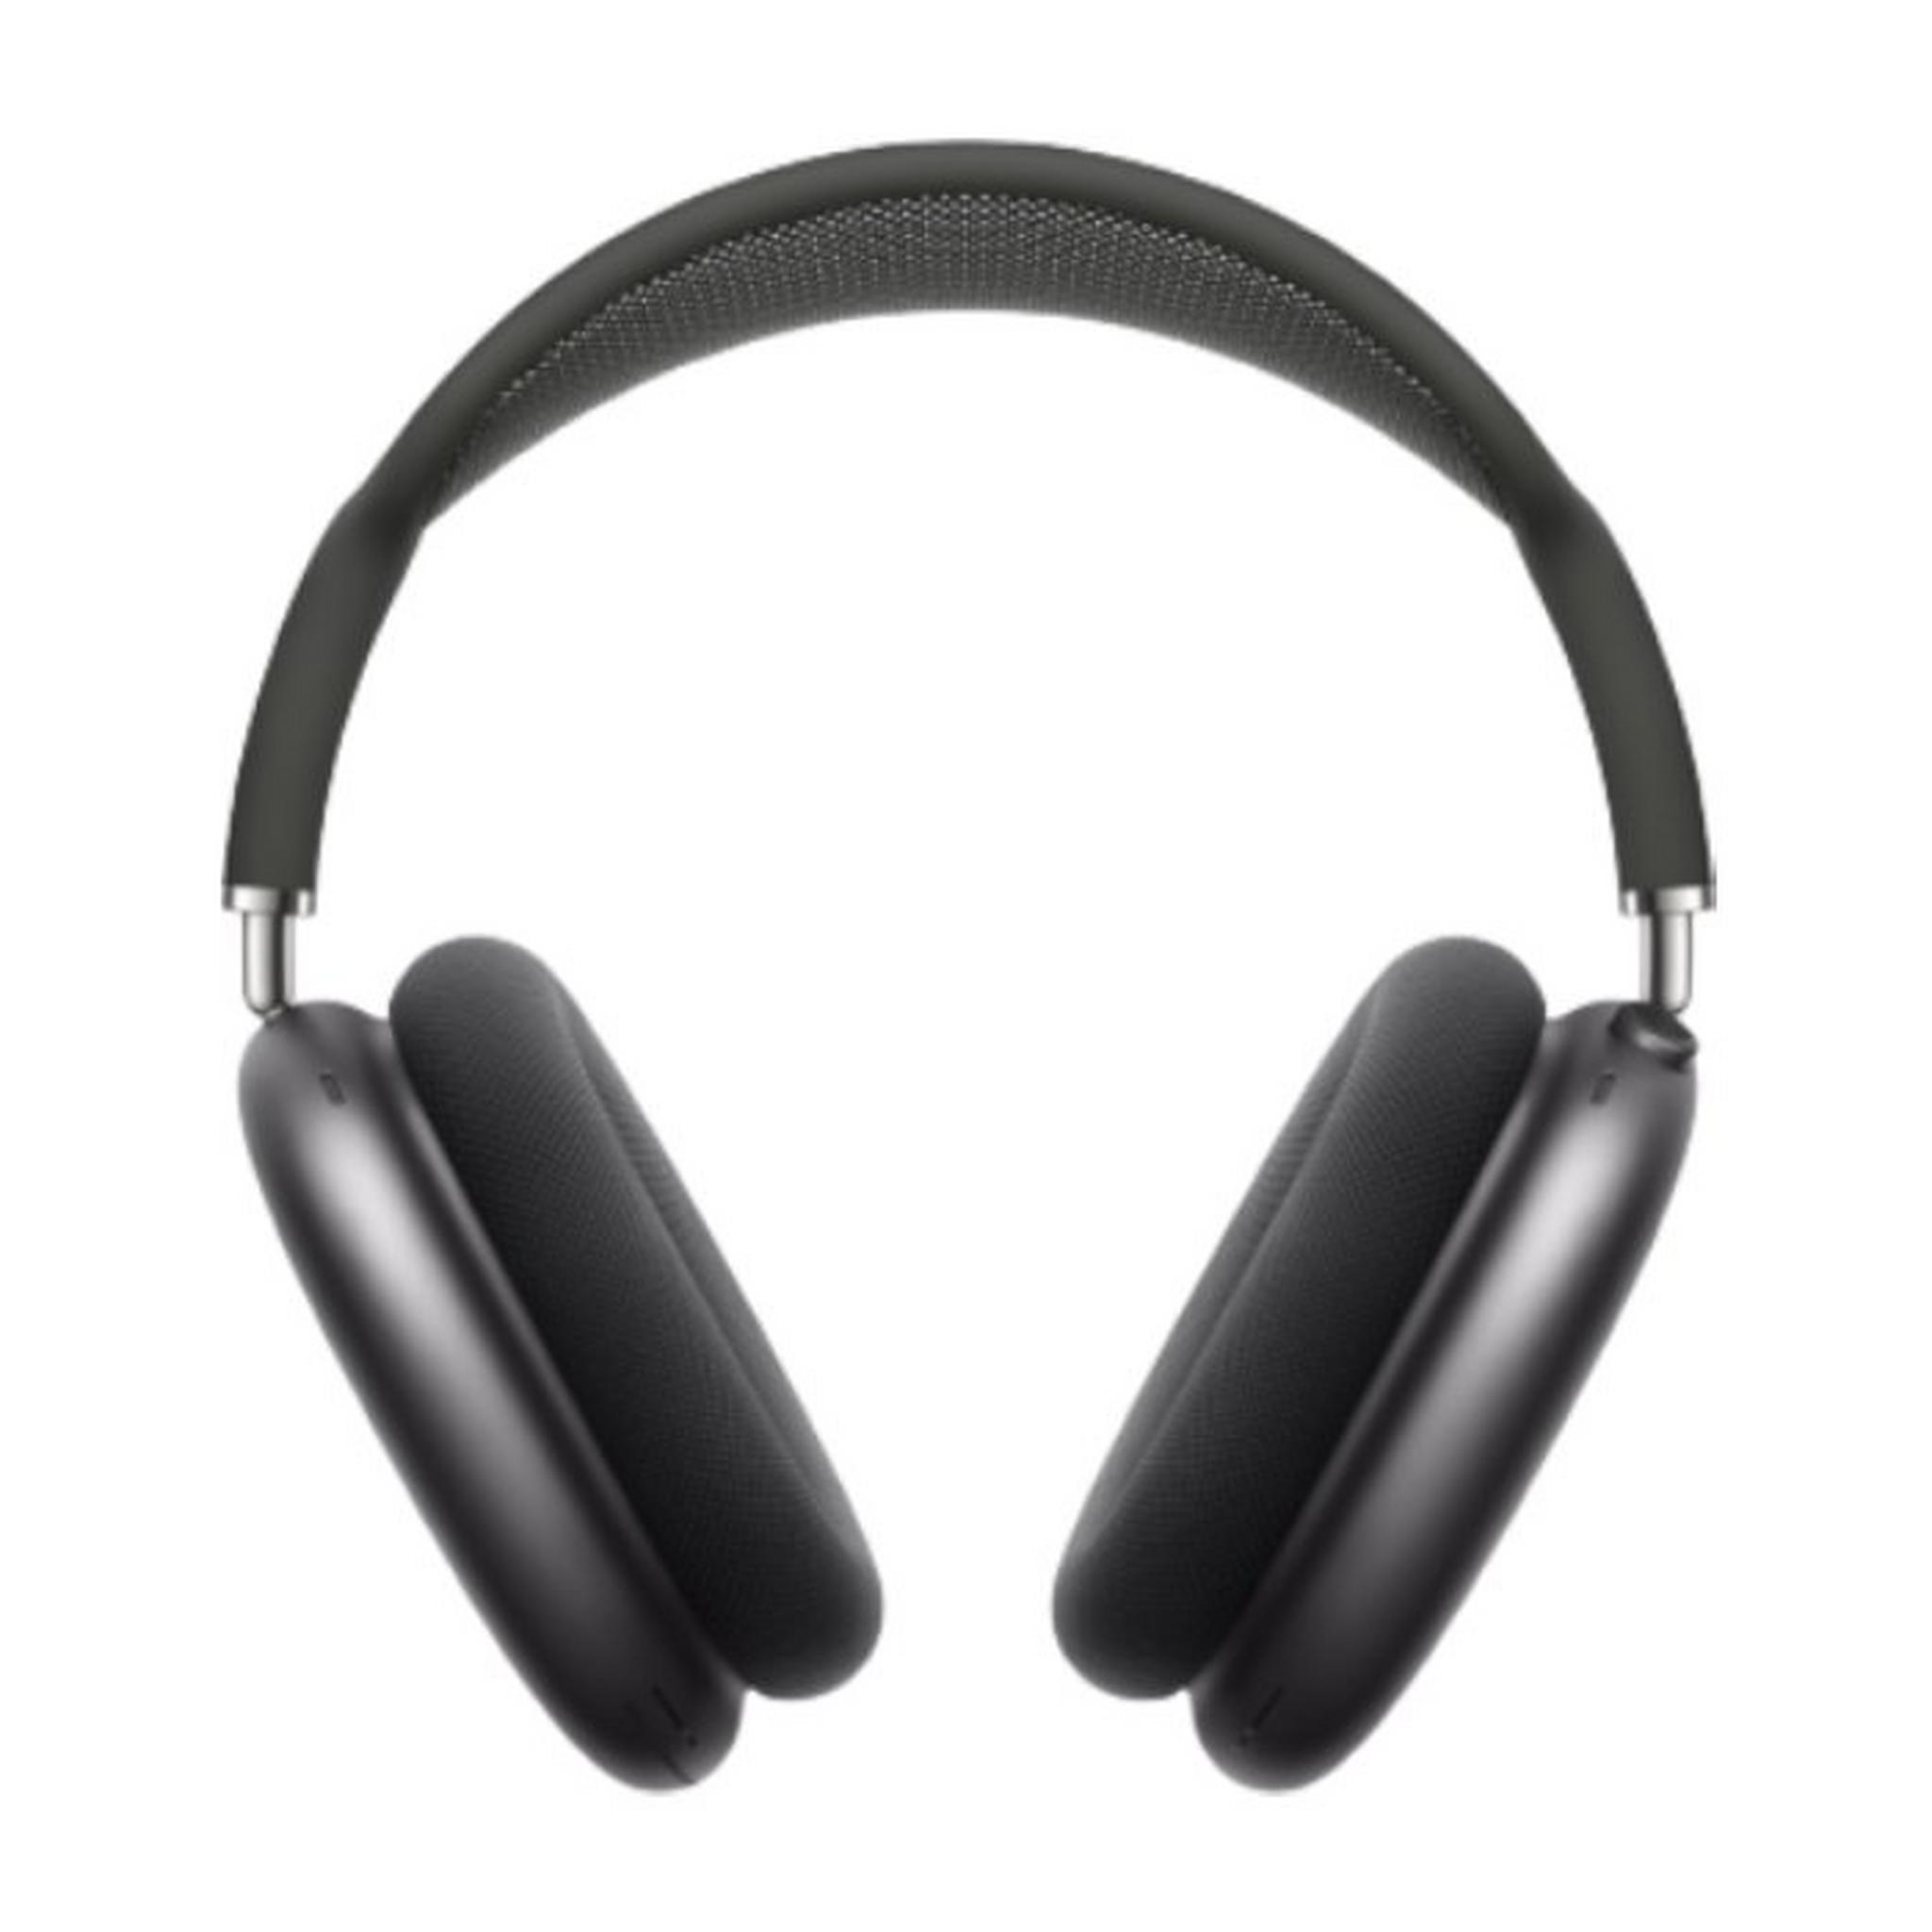 Pre-Order: Apple AirPods Max Headphones - Space Gray